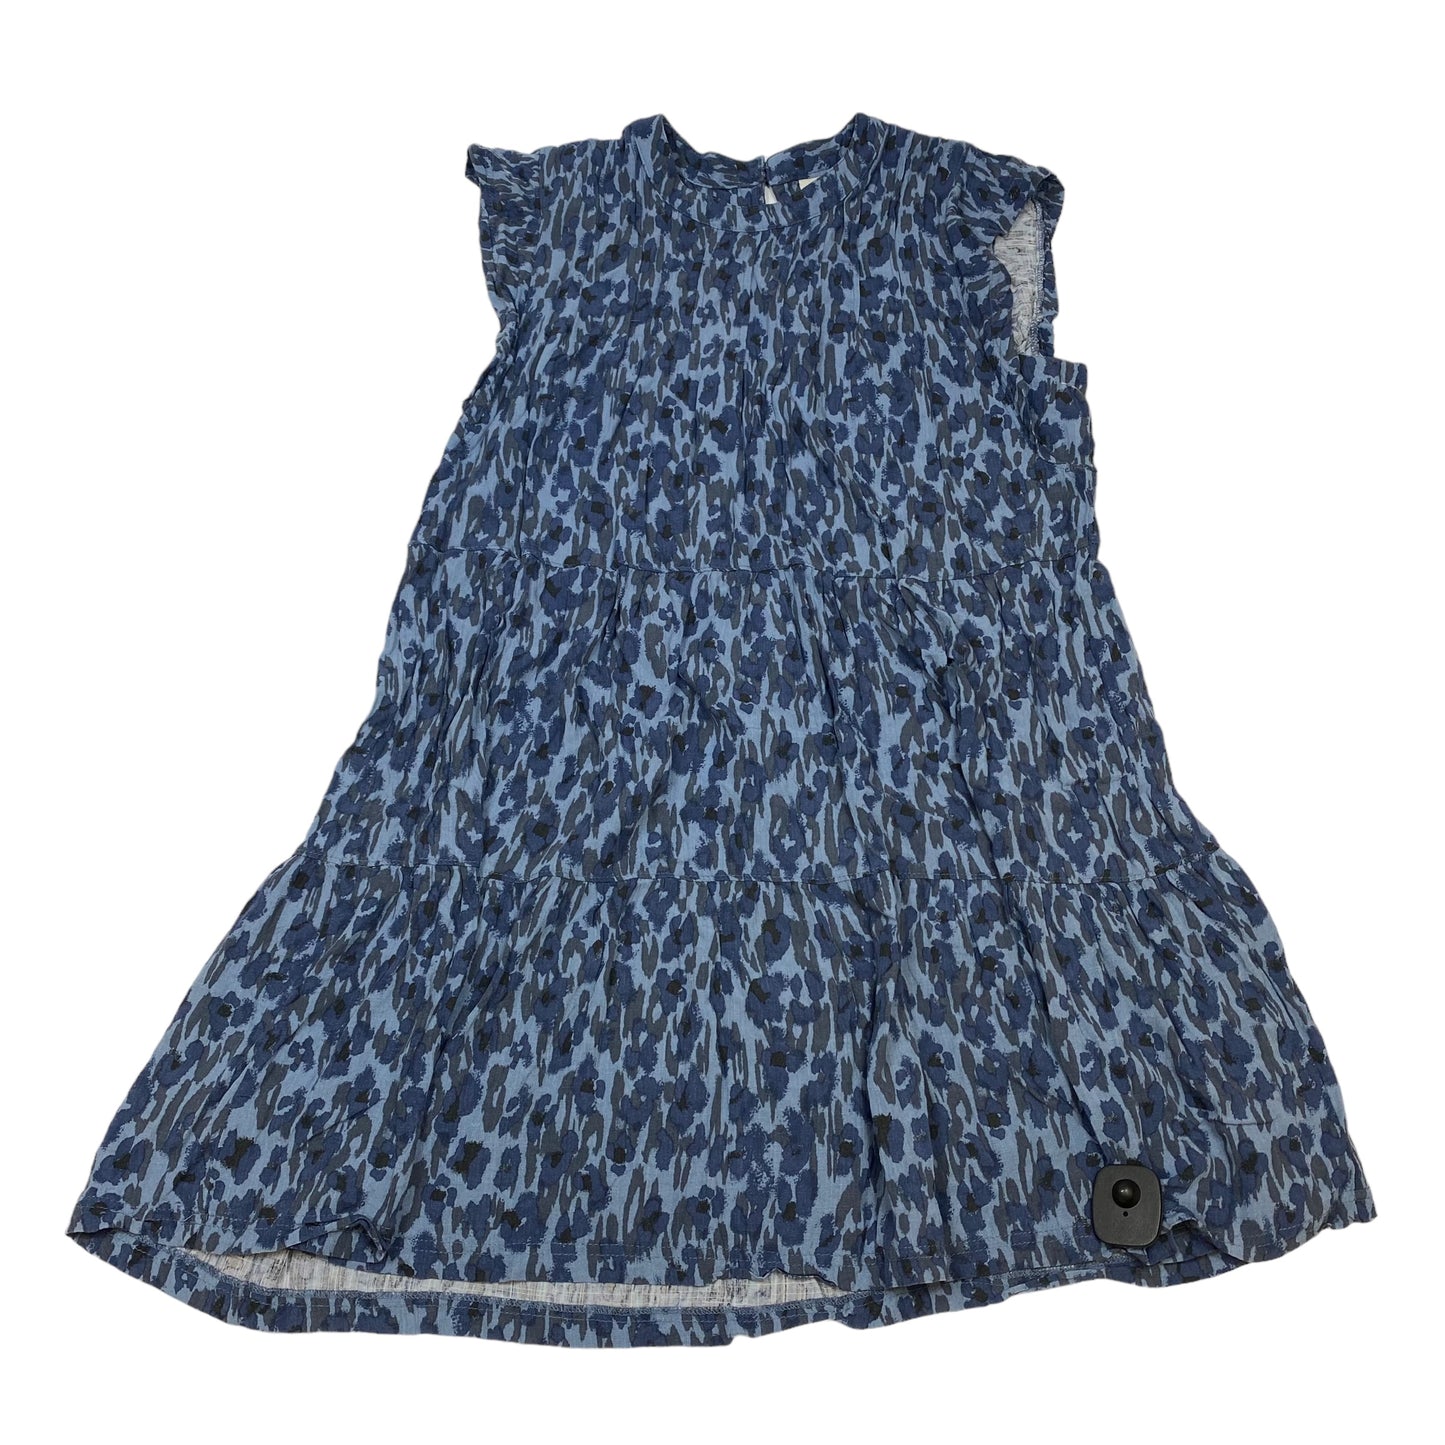 Blue Dress Casual Short Knox Rose, Size Xl